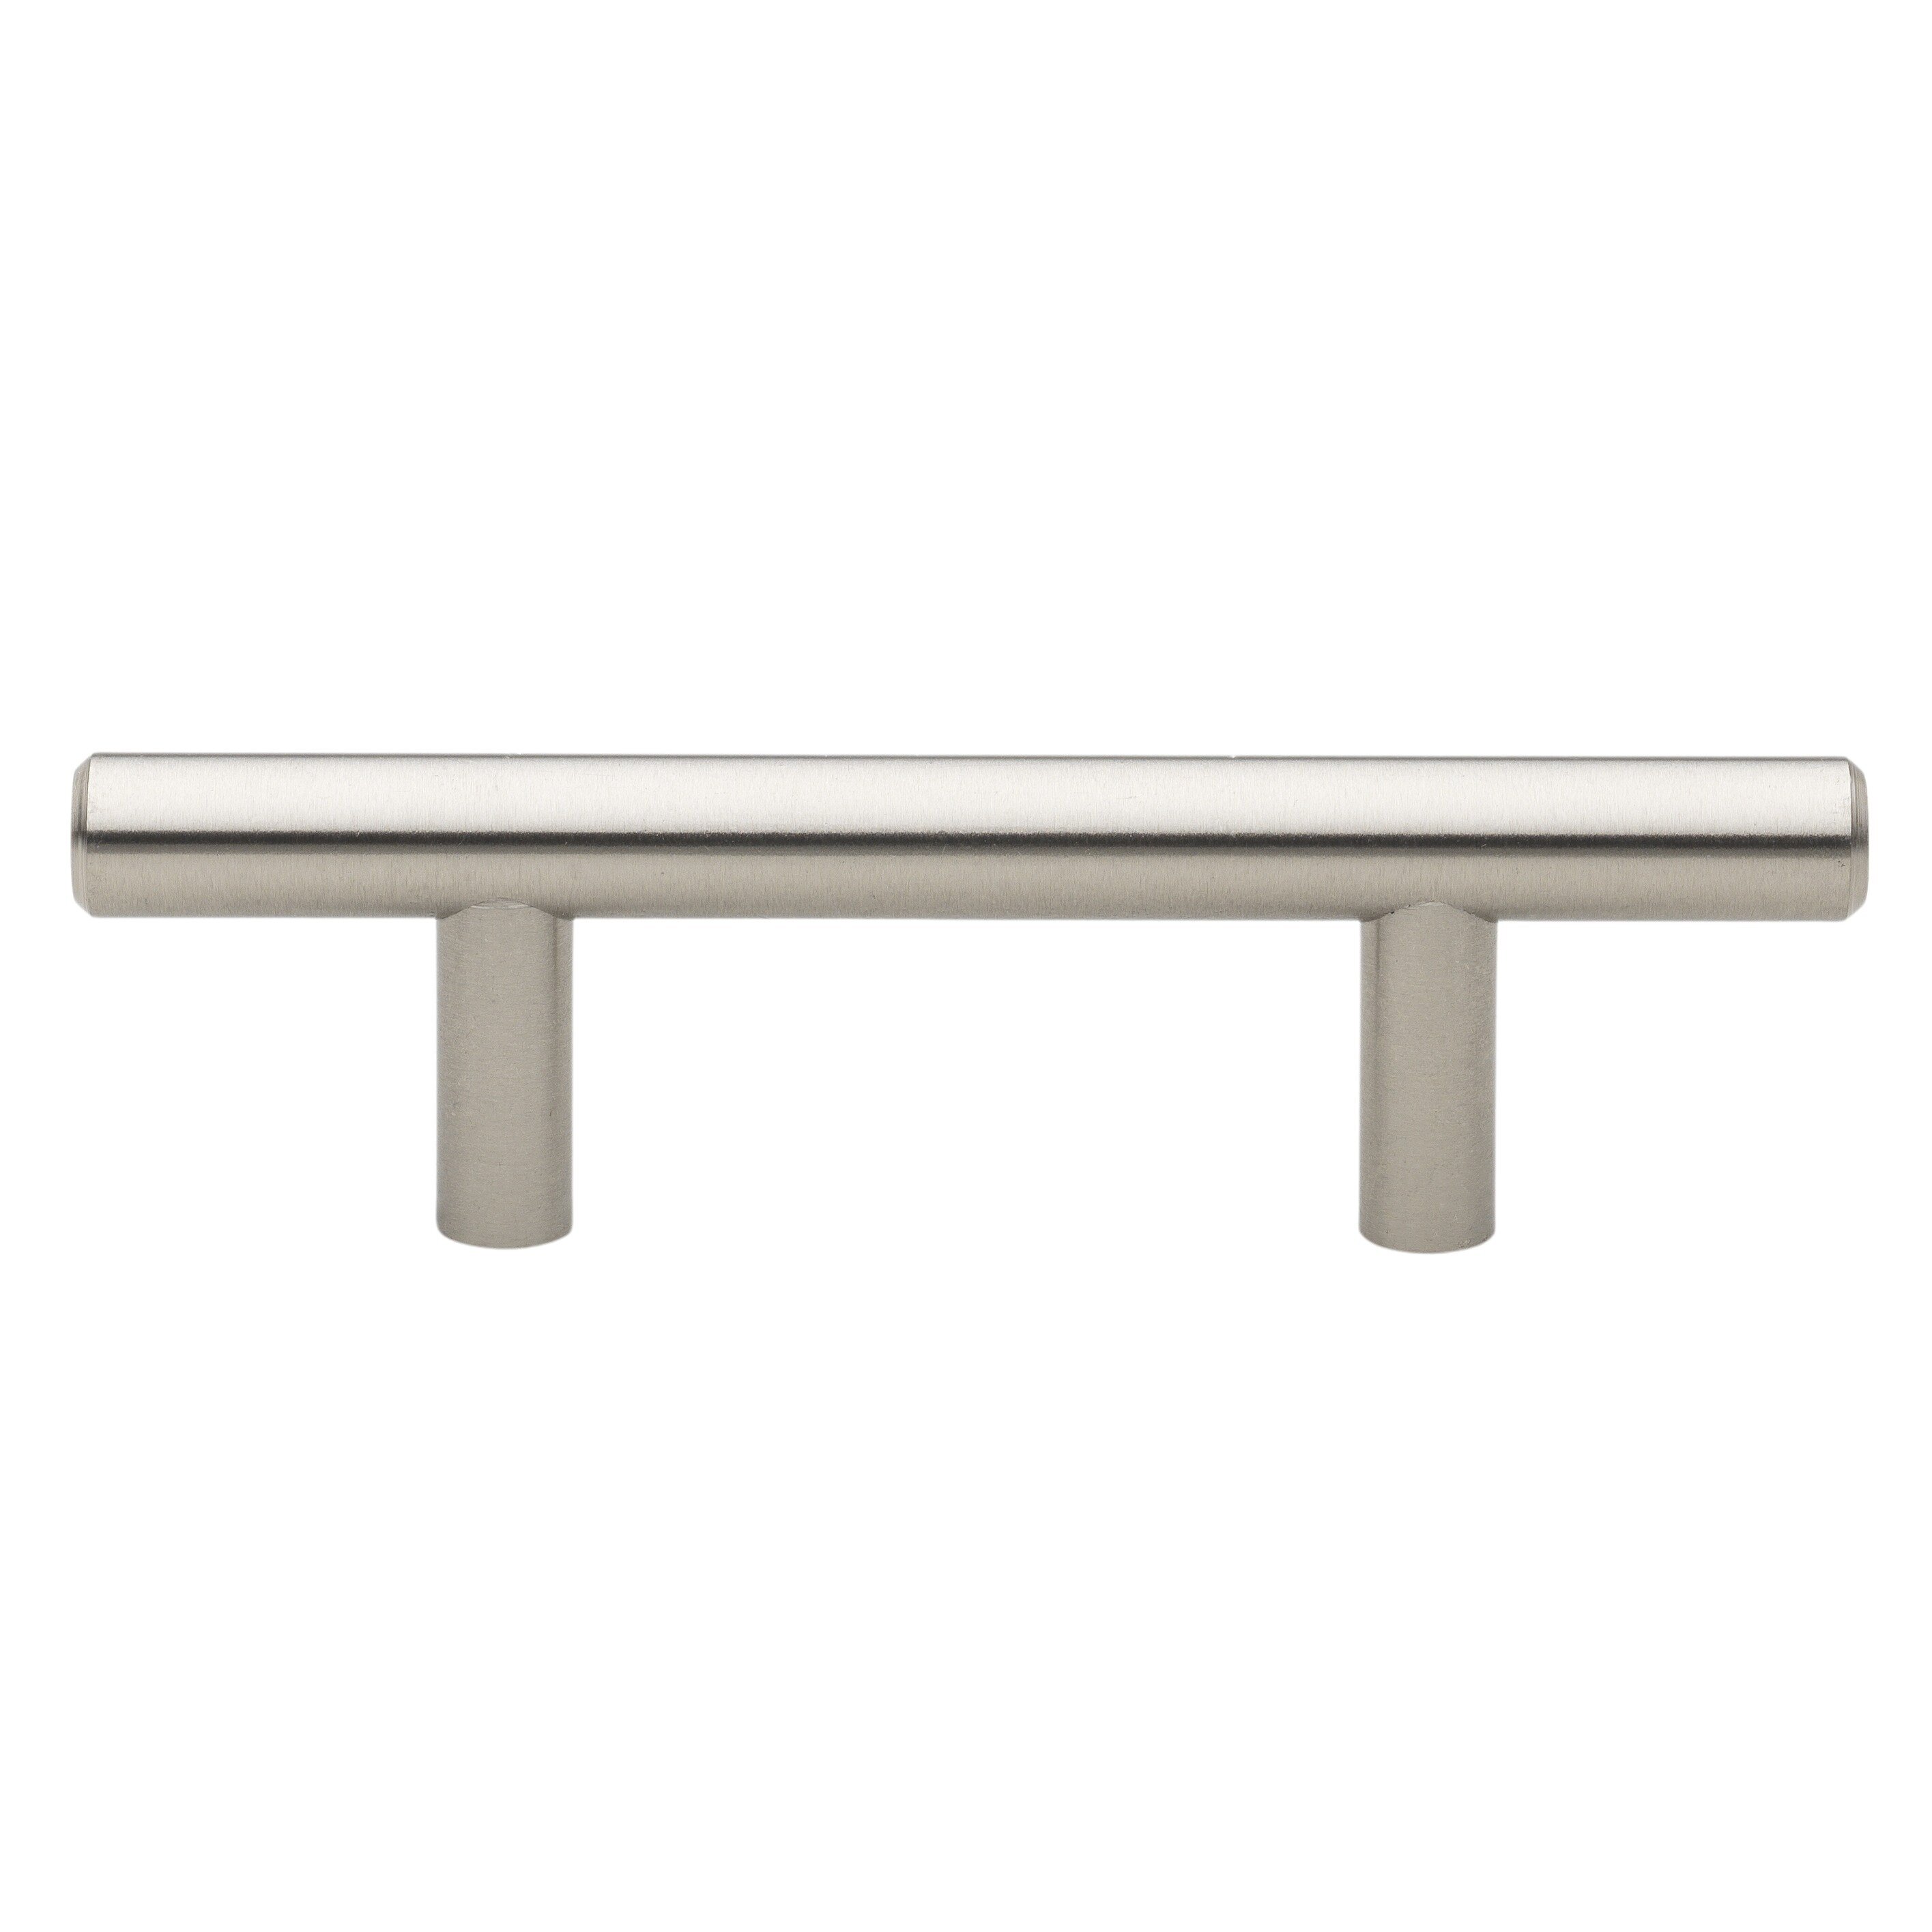 Aluminum Alloy Cupboard Handle Bar Cabinet Pulls Knobs Home Furniture Decoration Color: Black, Size: 128MM